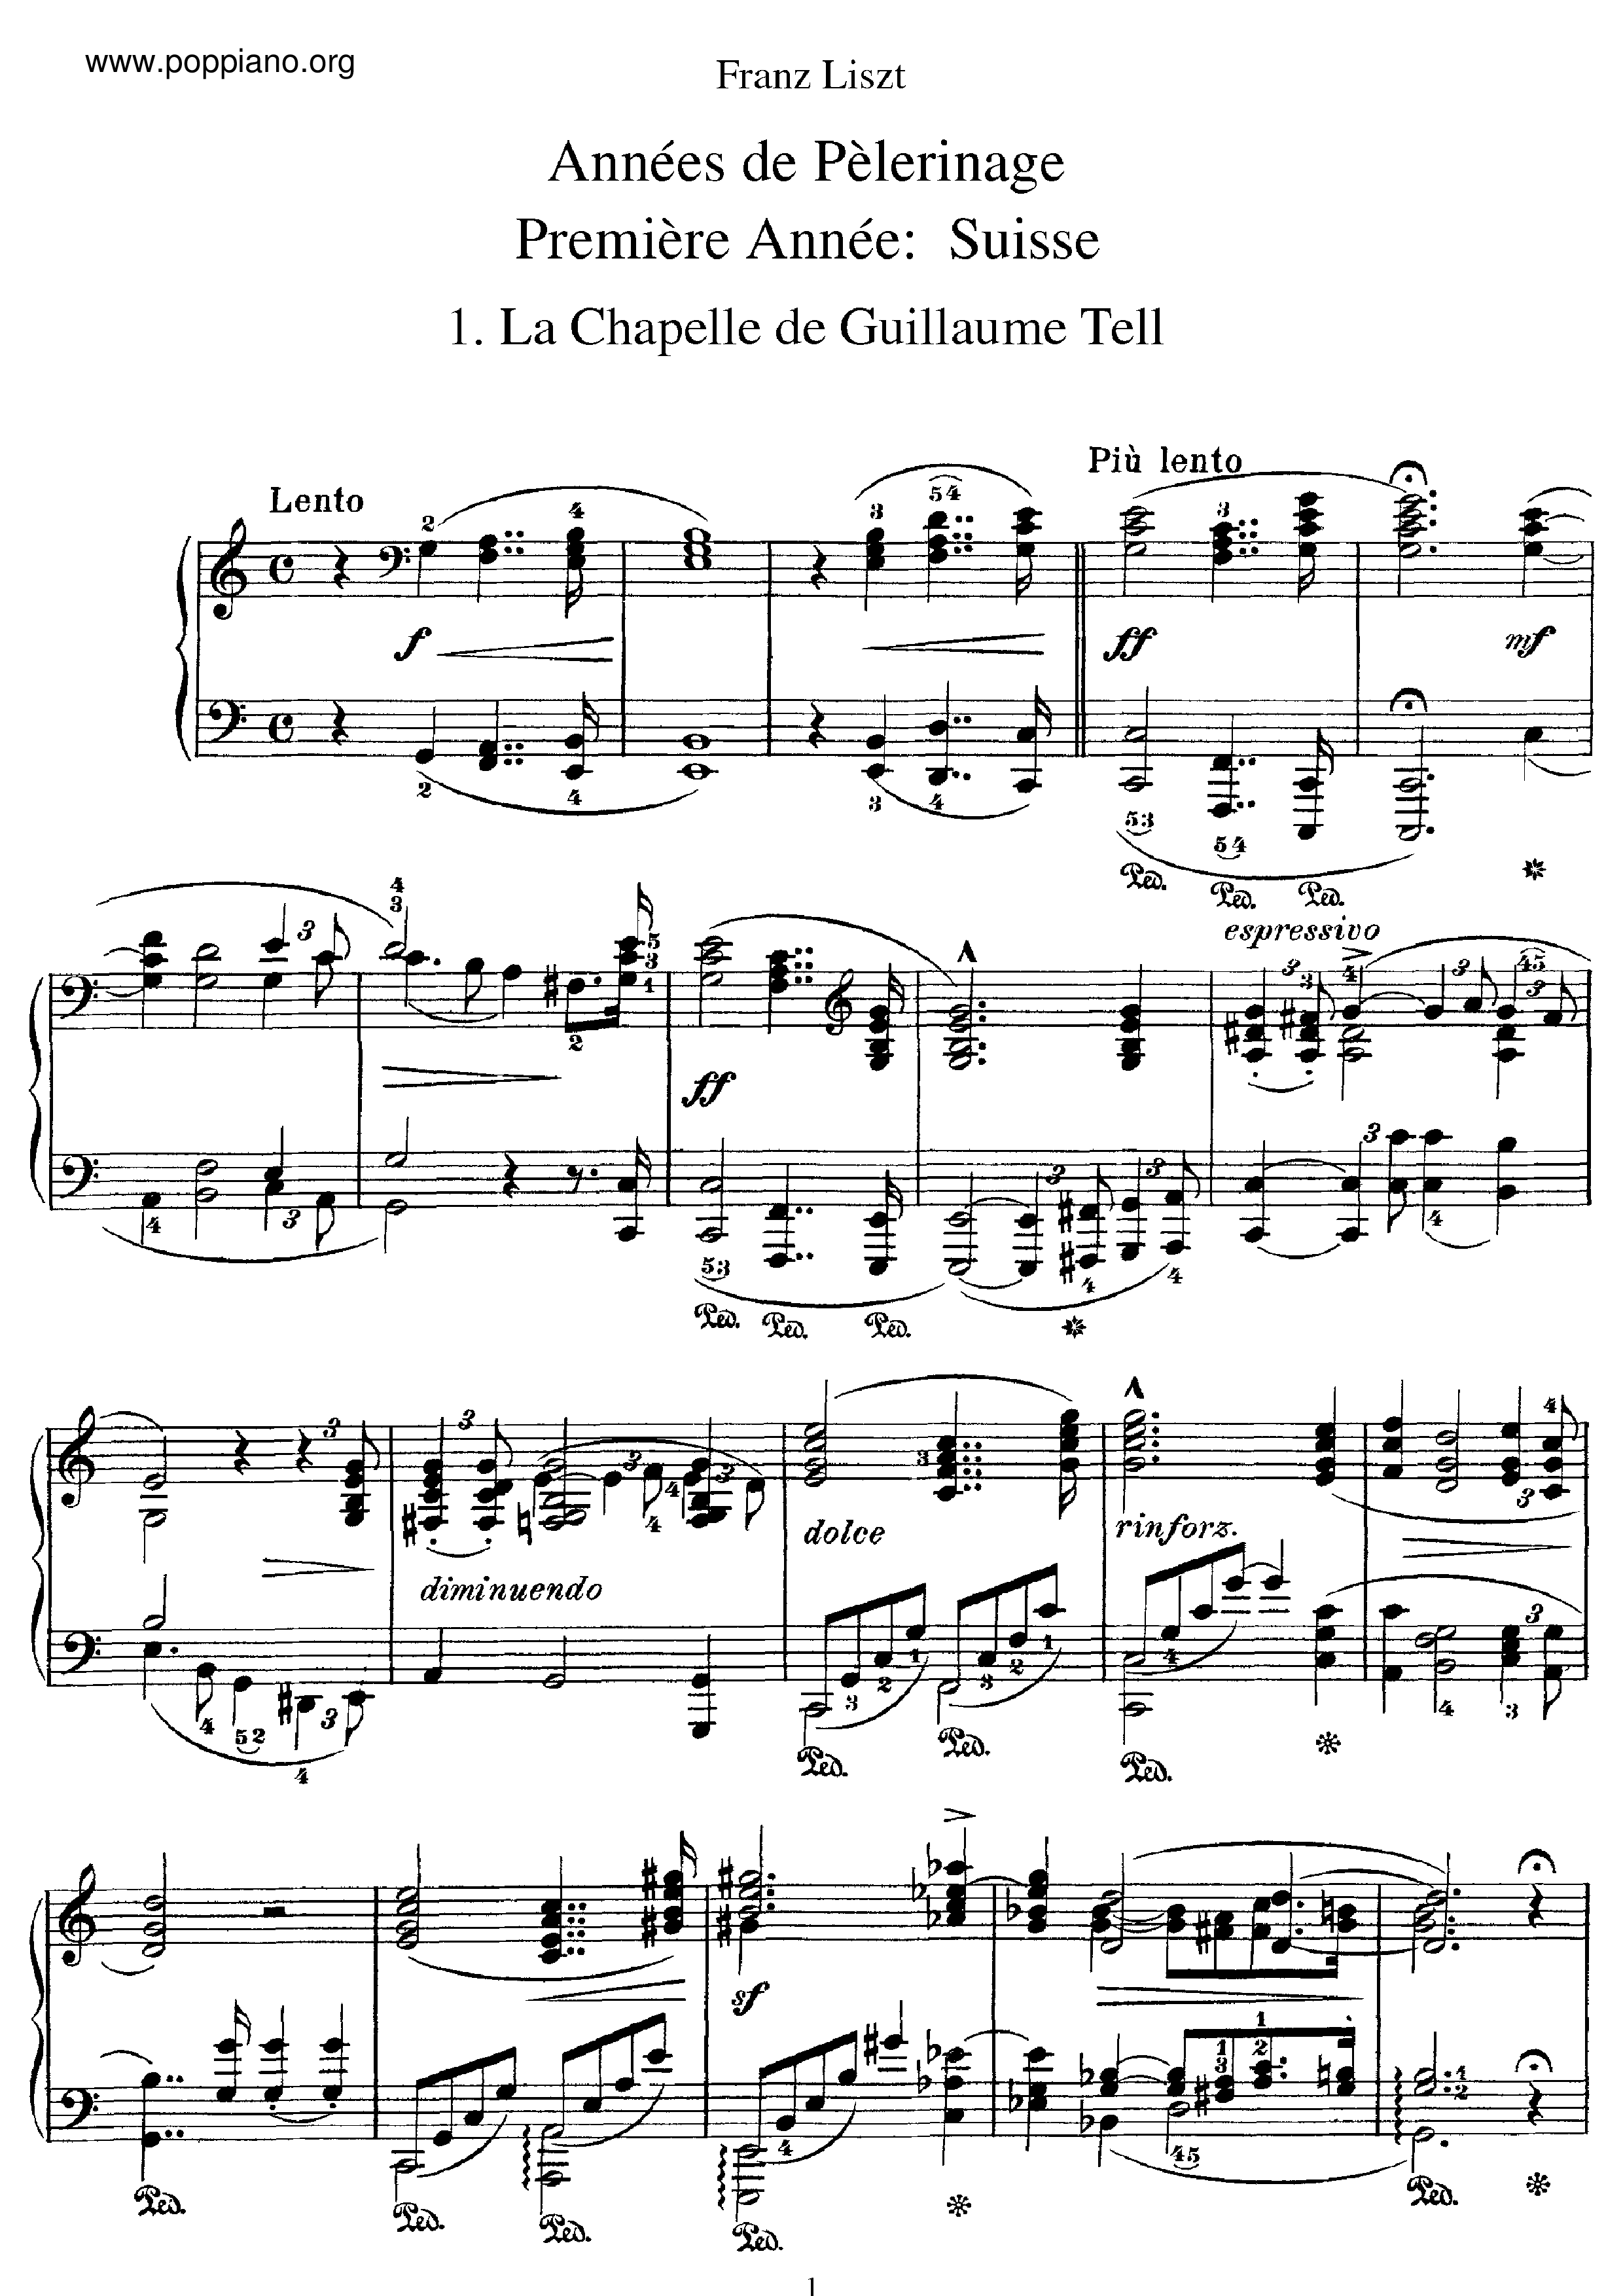 Premiere Annee: Suisse, S.160琴谱